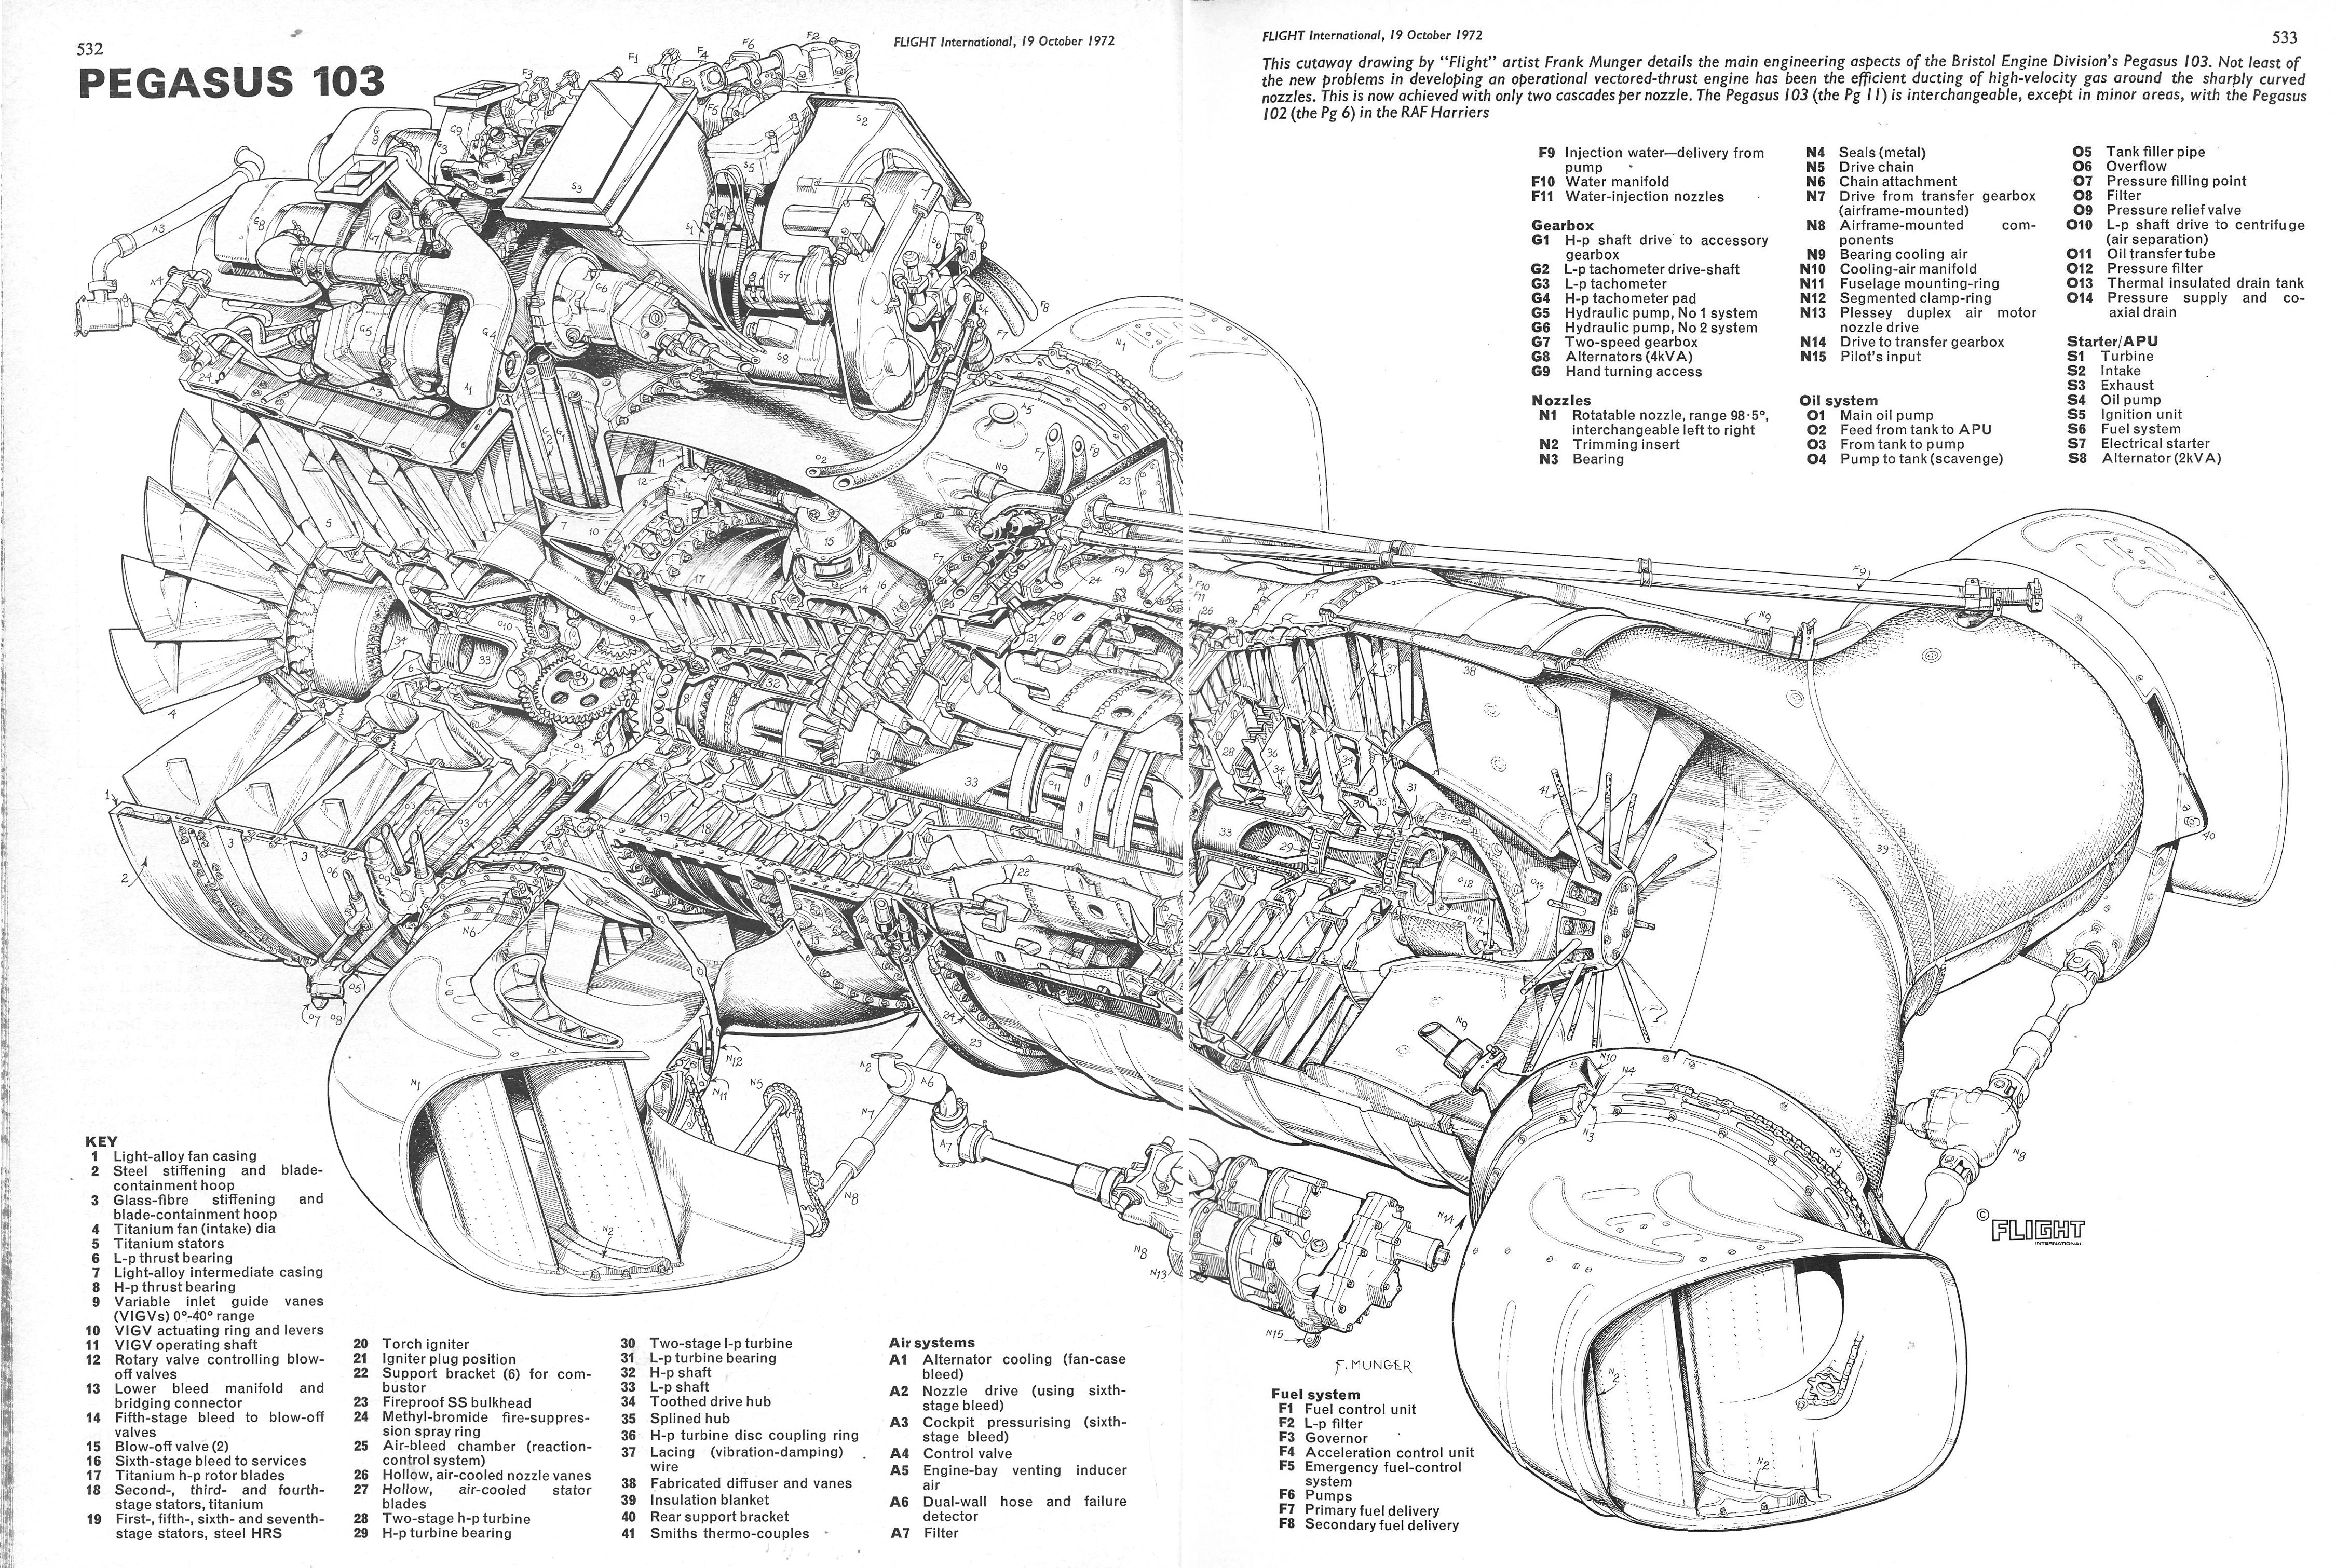 Radial Aircraft Engine Diagram Rolls Royce Pegasus 103 Turbofan Cutaway Of Radial Aircraft Engine Diagram